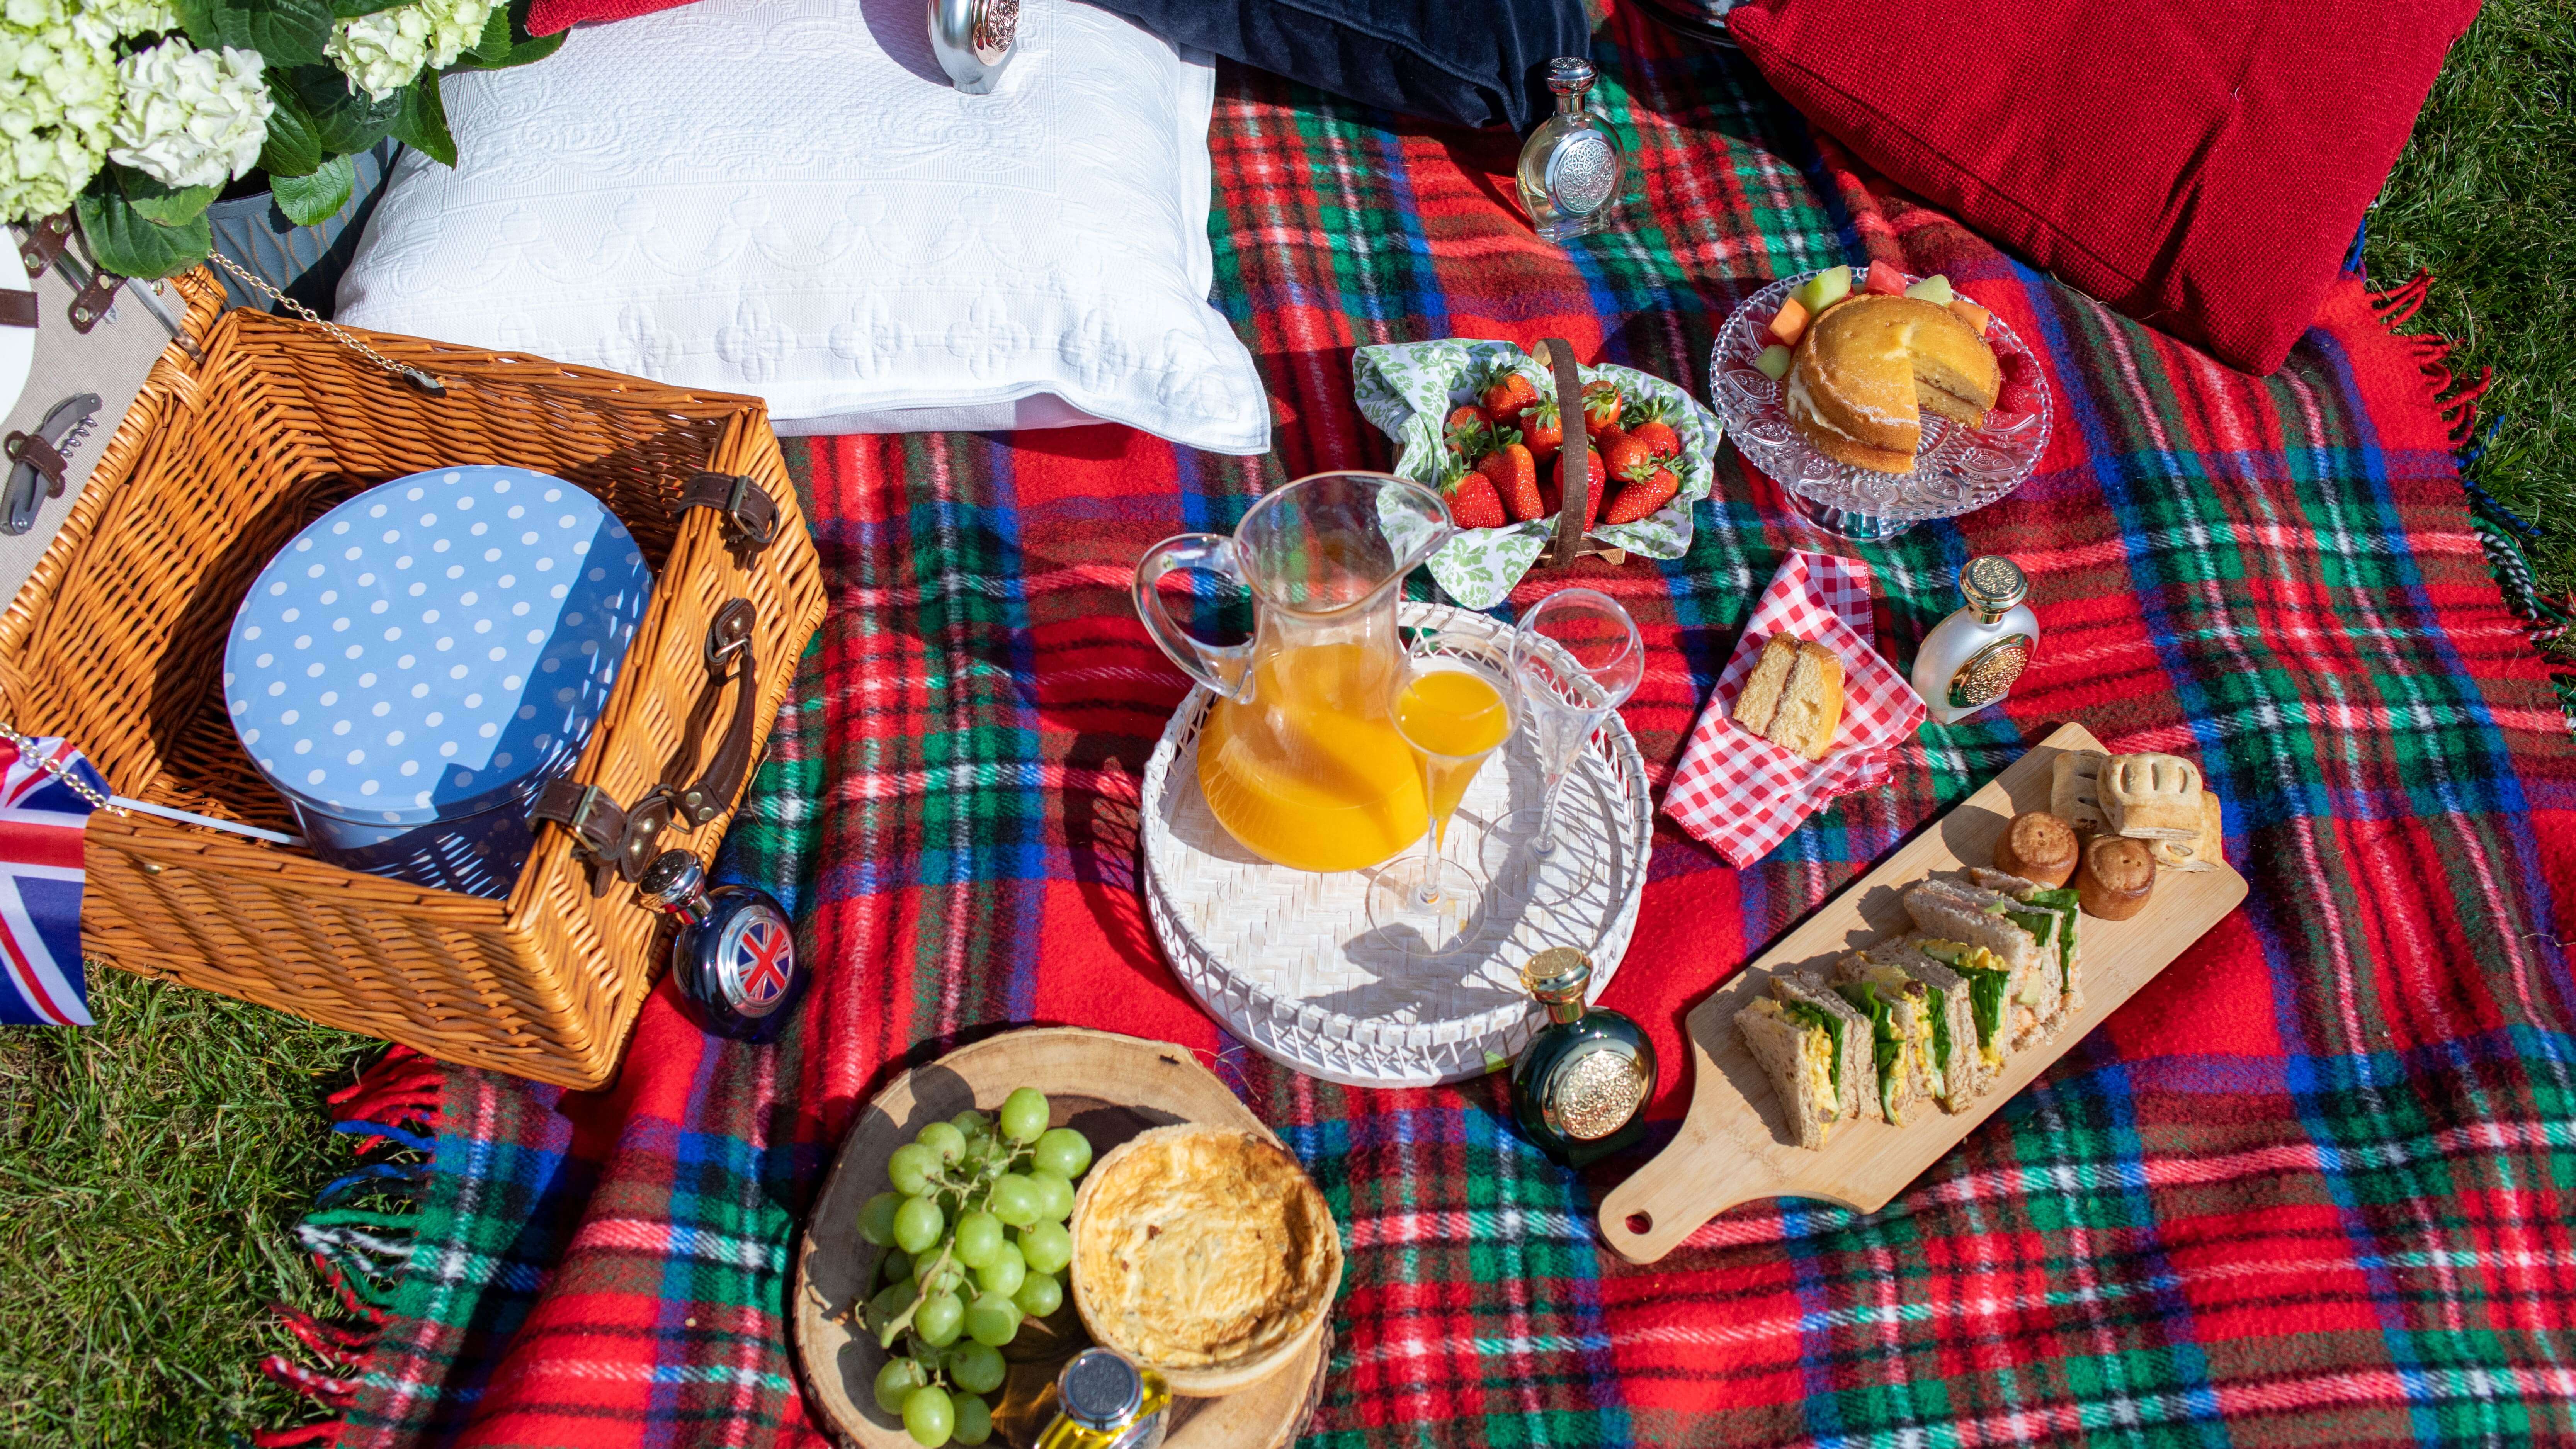 Jubilee picnic